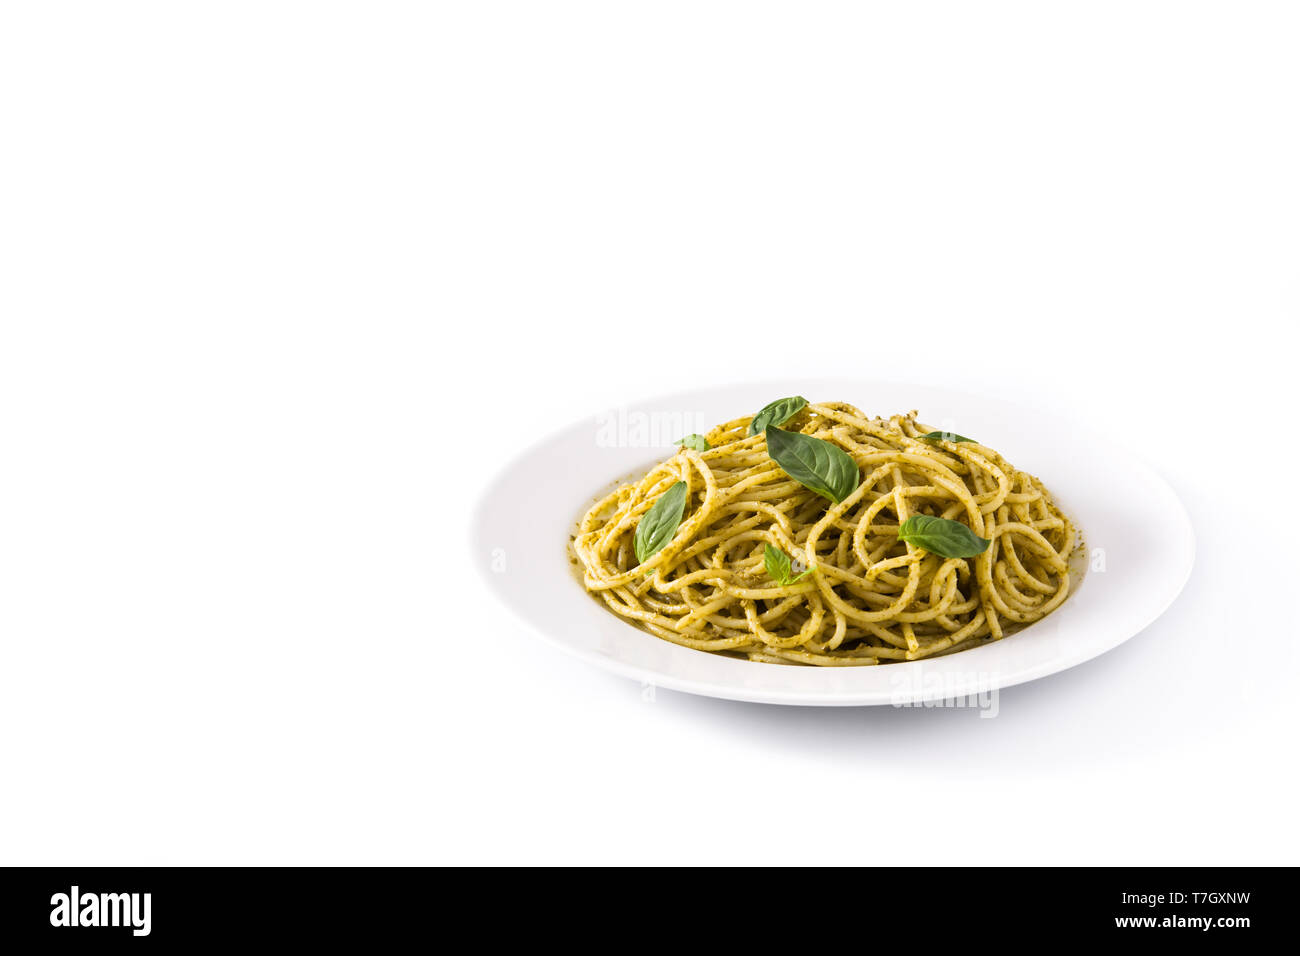 Espaguetis pasta con salsa pesto aislado sobre fondo blanco. Foto de stock